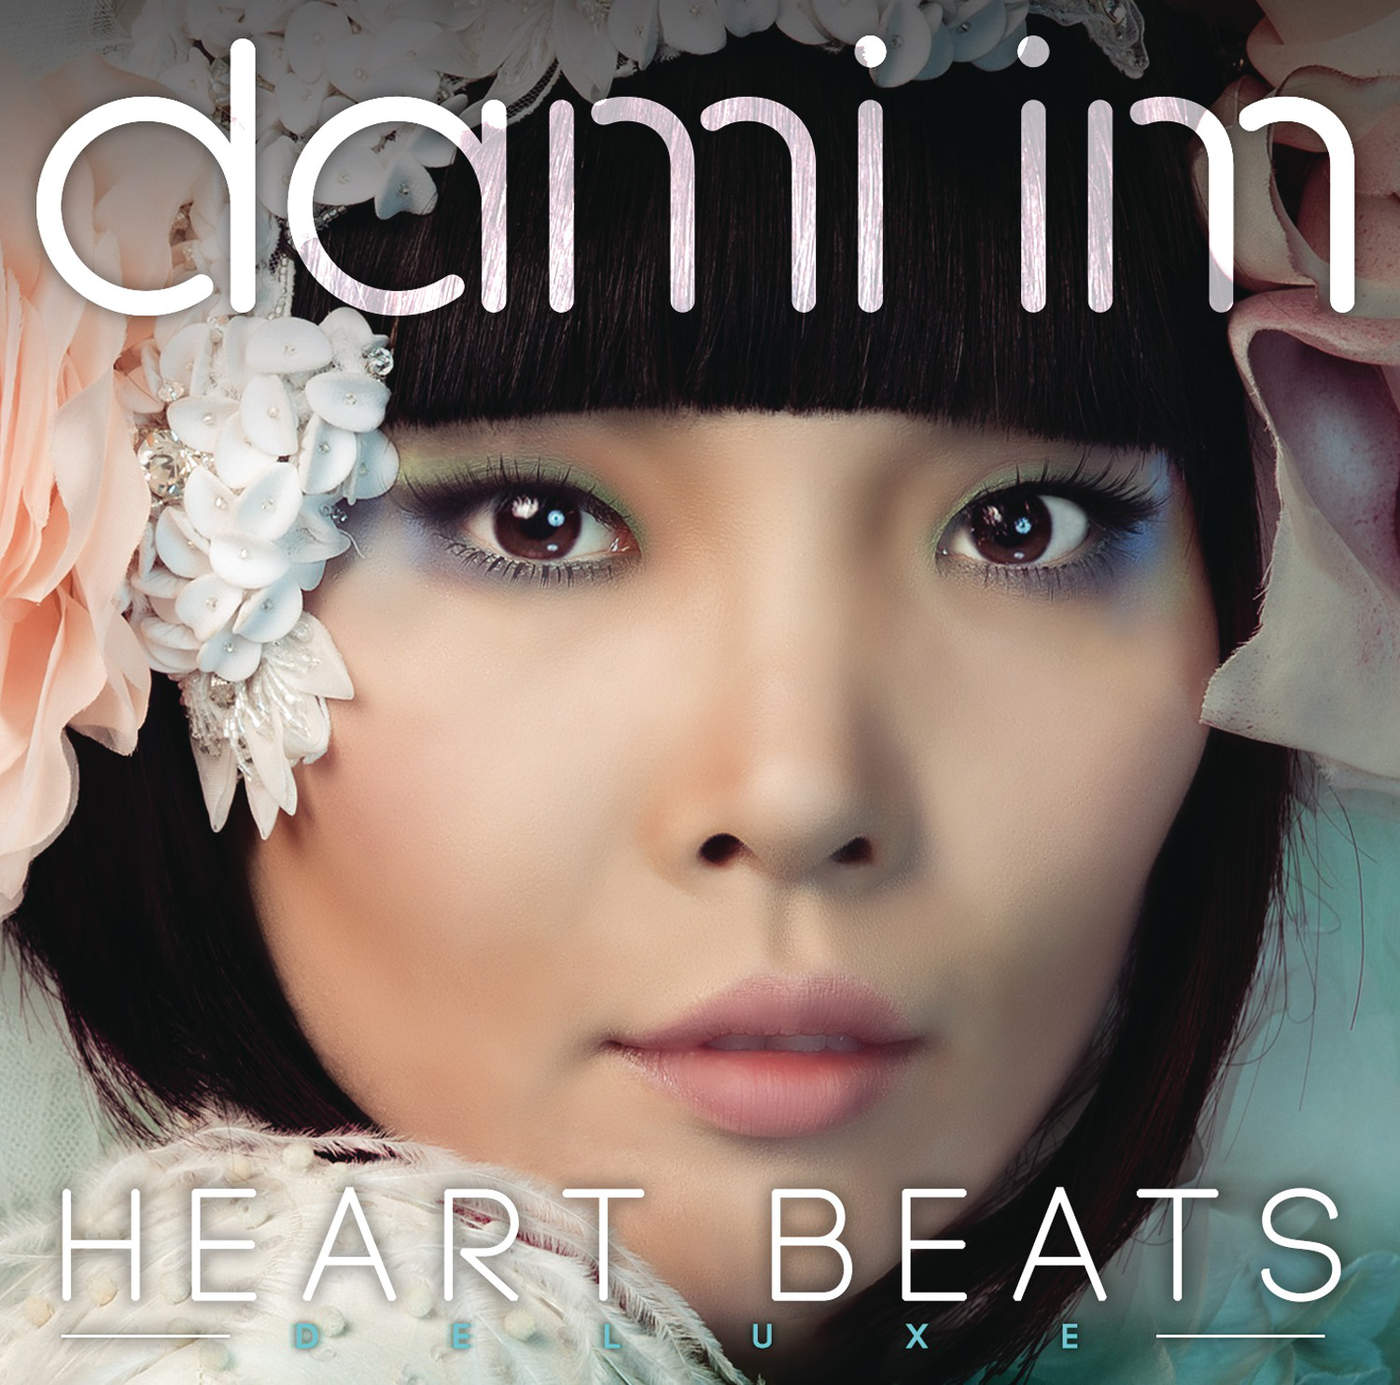 Dami Im – Heart Beats (Deluxe Edition)